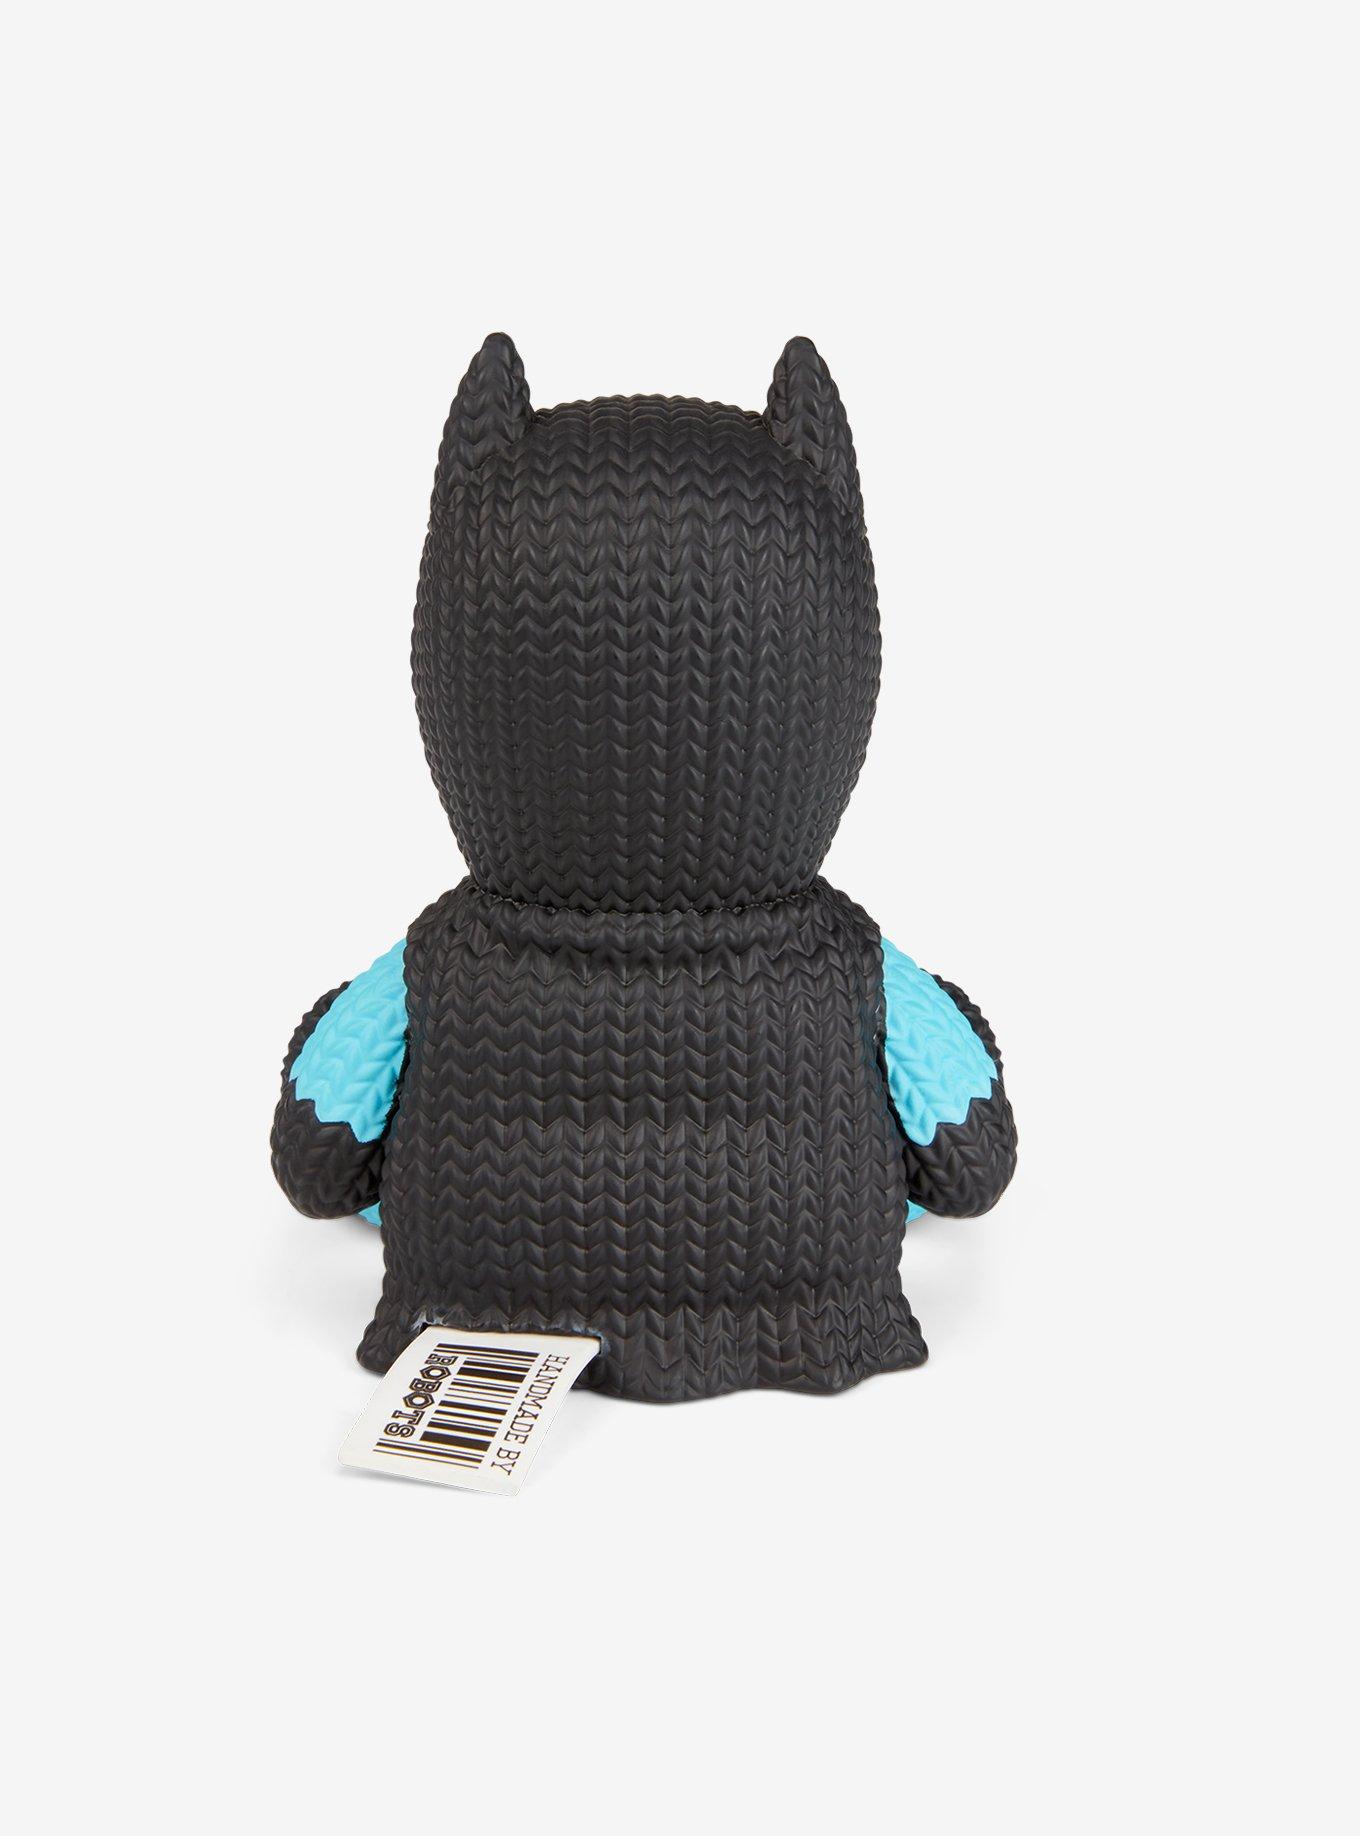 Handmade By Robots DC Comics Knit Series Batman Black Light Vinyl Figure Hot Topic Exclusive